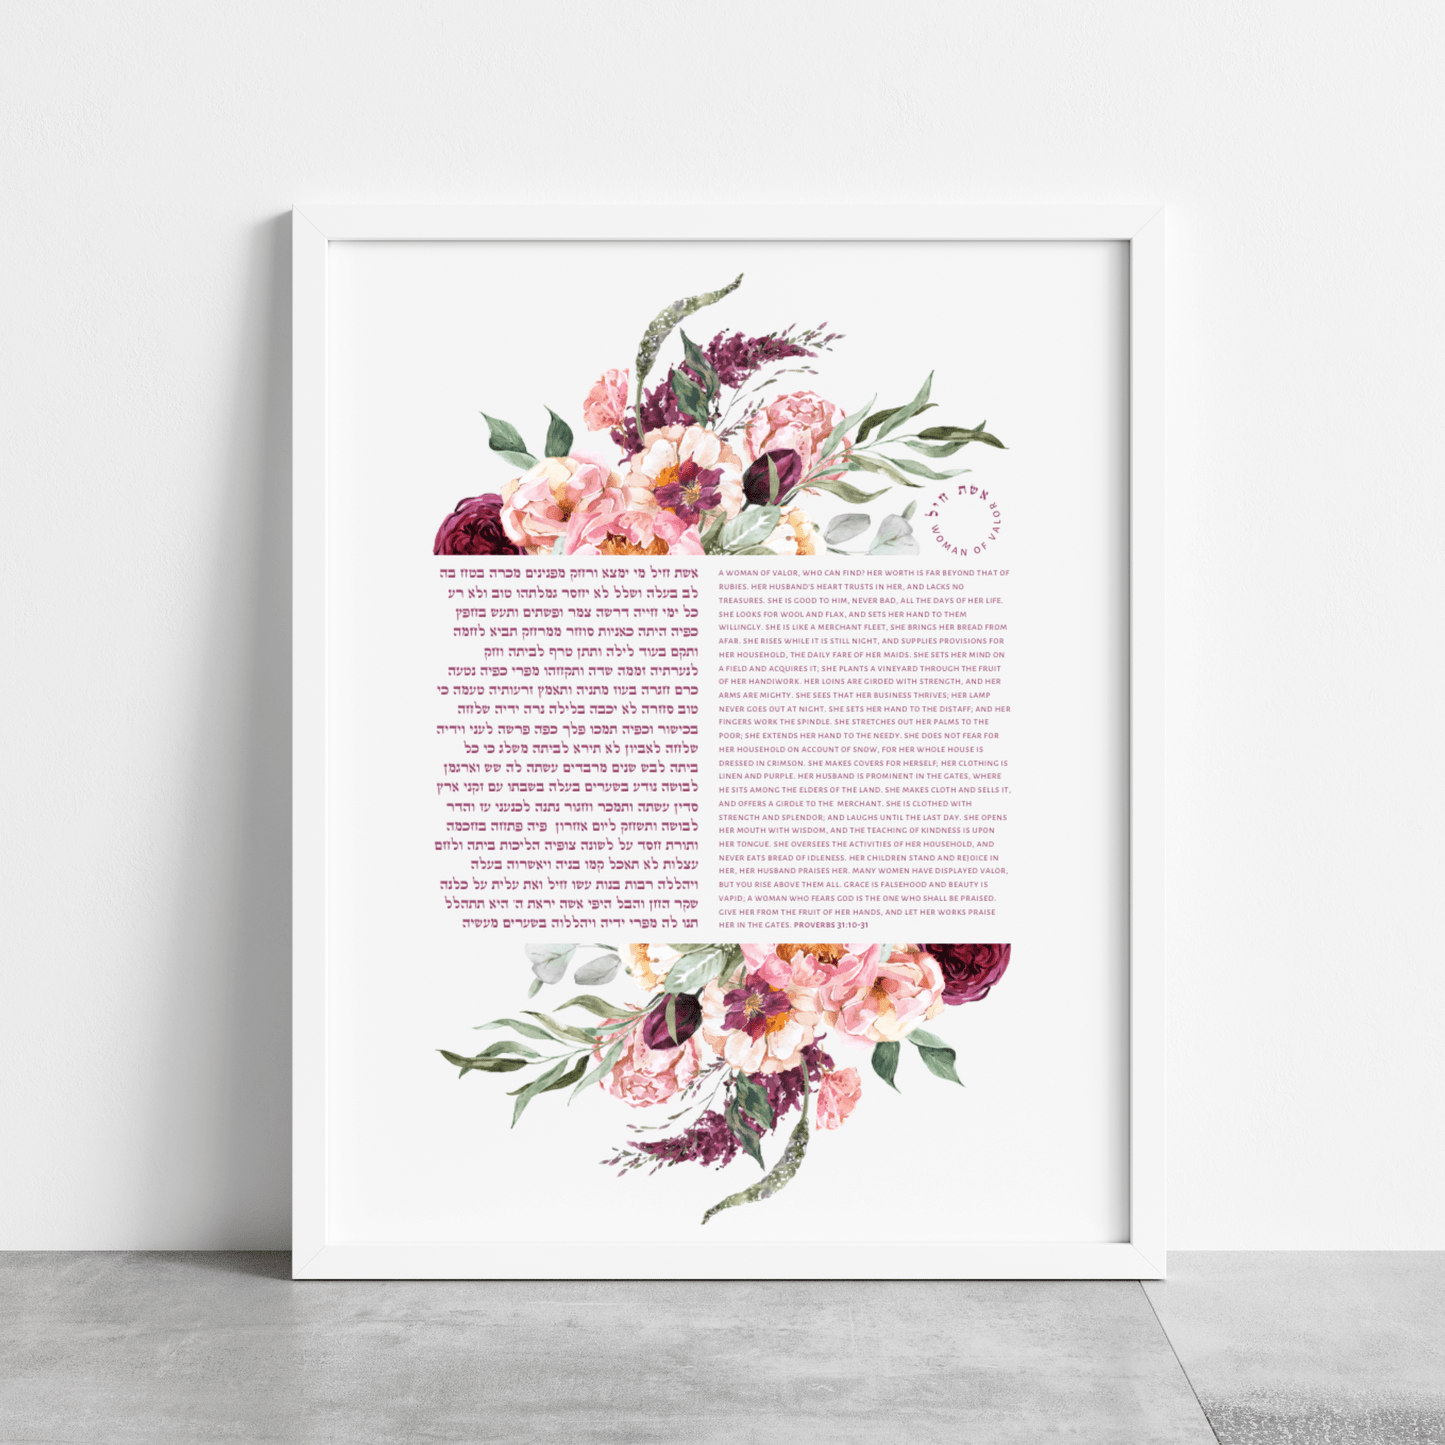 The Verse Prints White Wood Frame / 8x12 Eshet Chayil Deep Floral Print - Floral